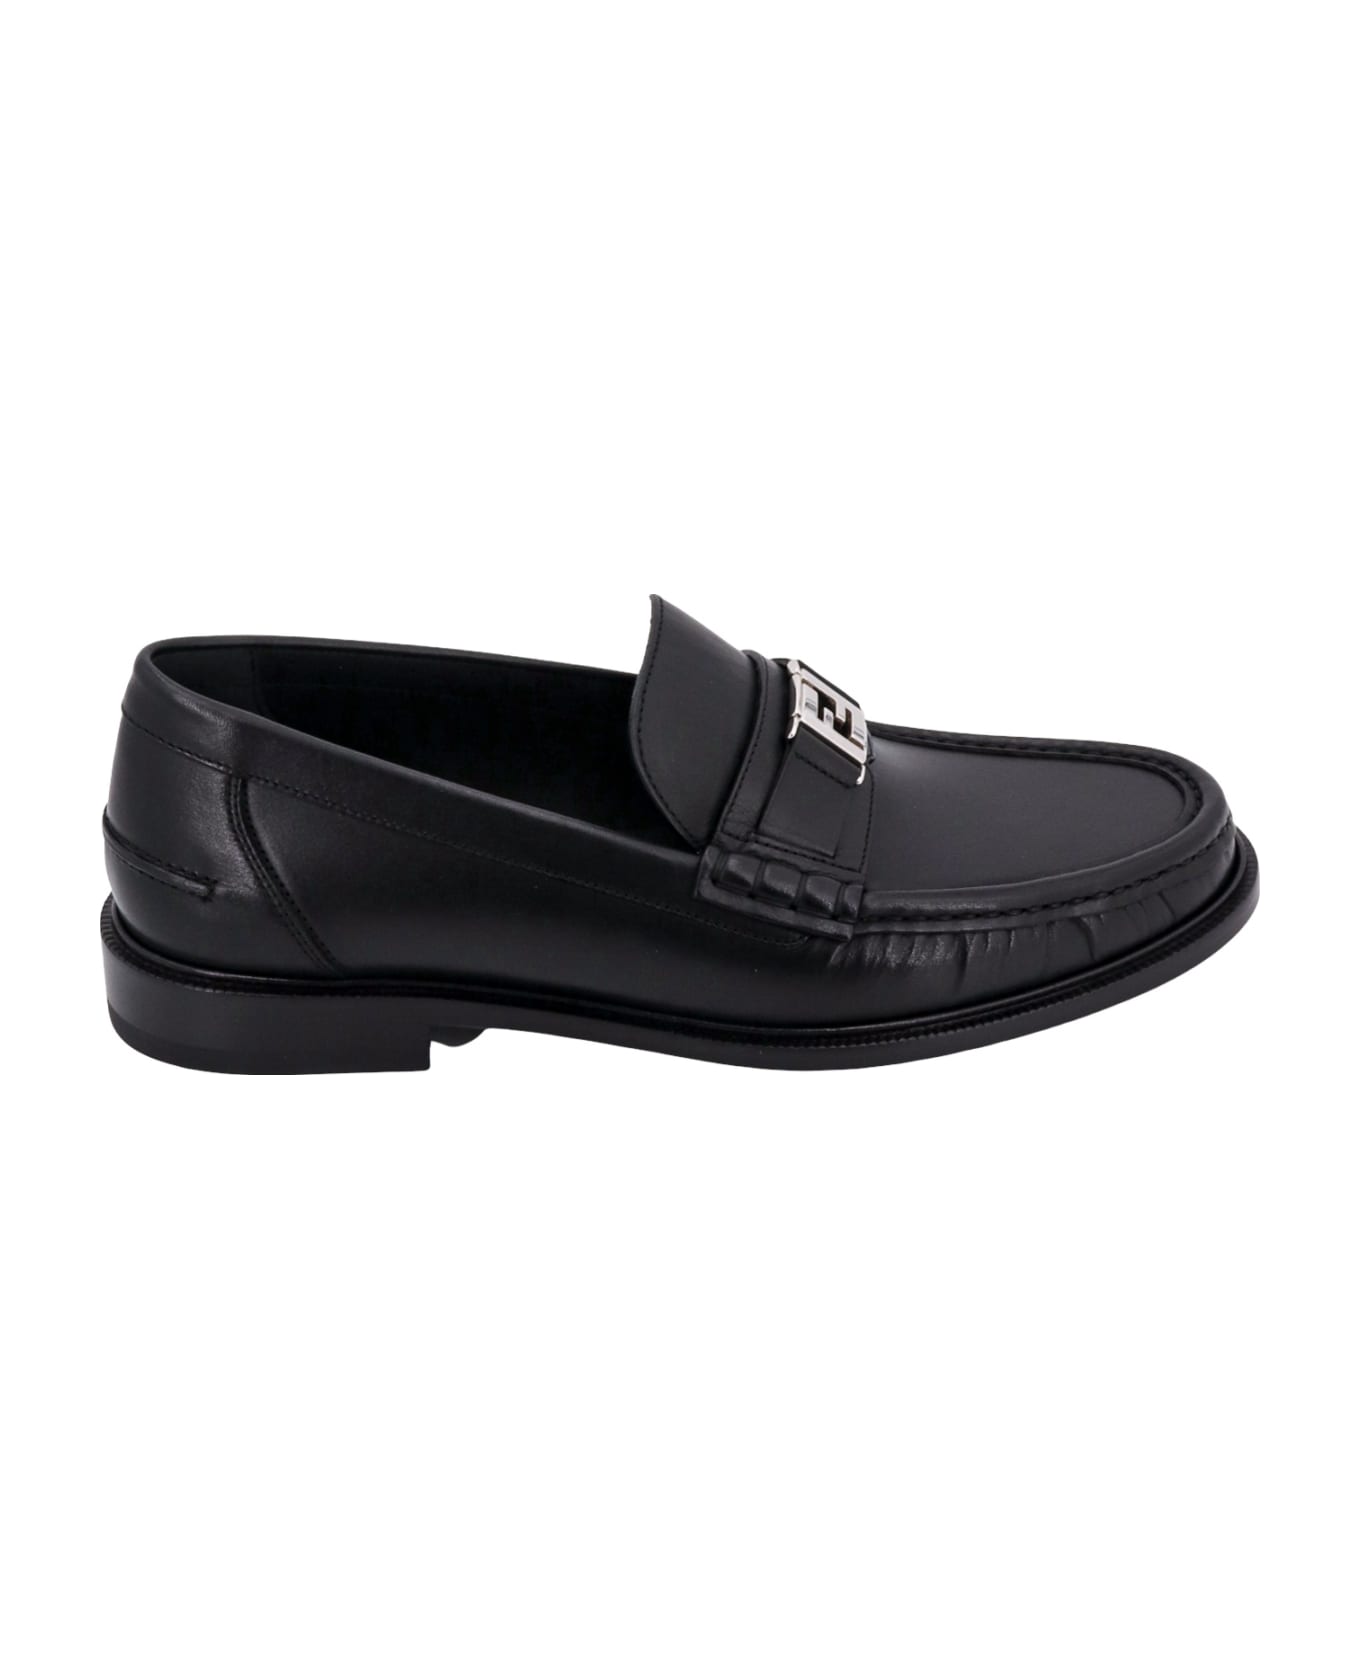 Fendi Ff Squared Loafers - Black